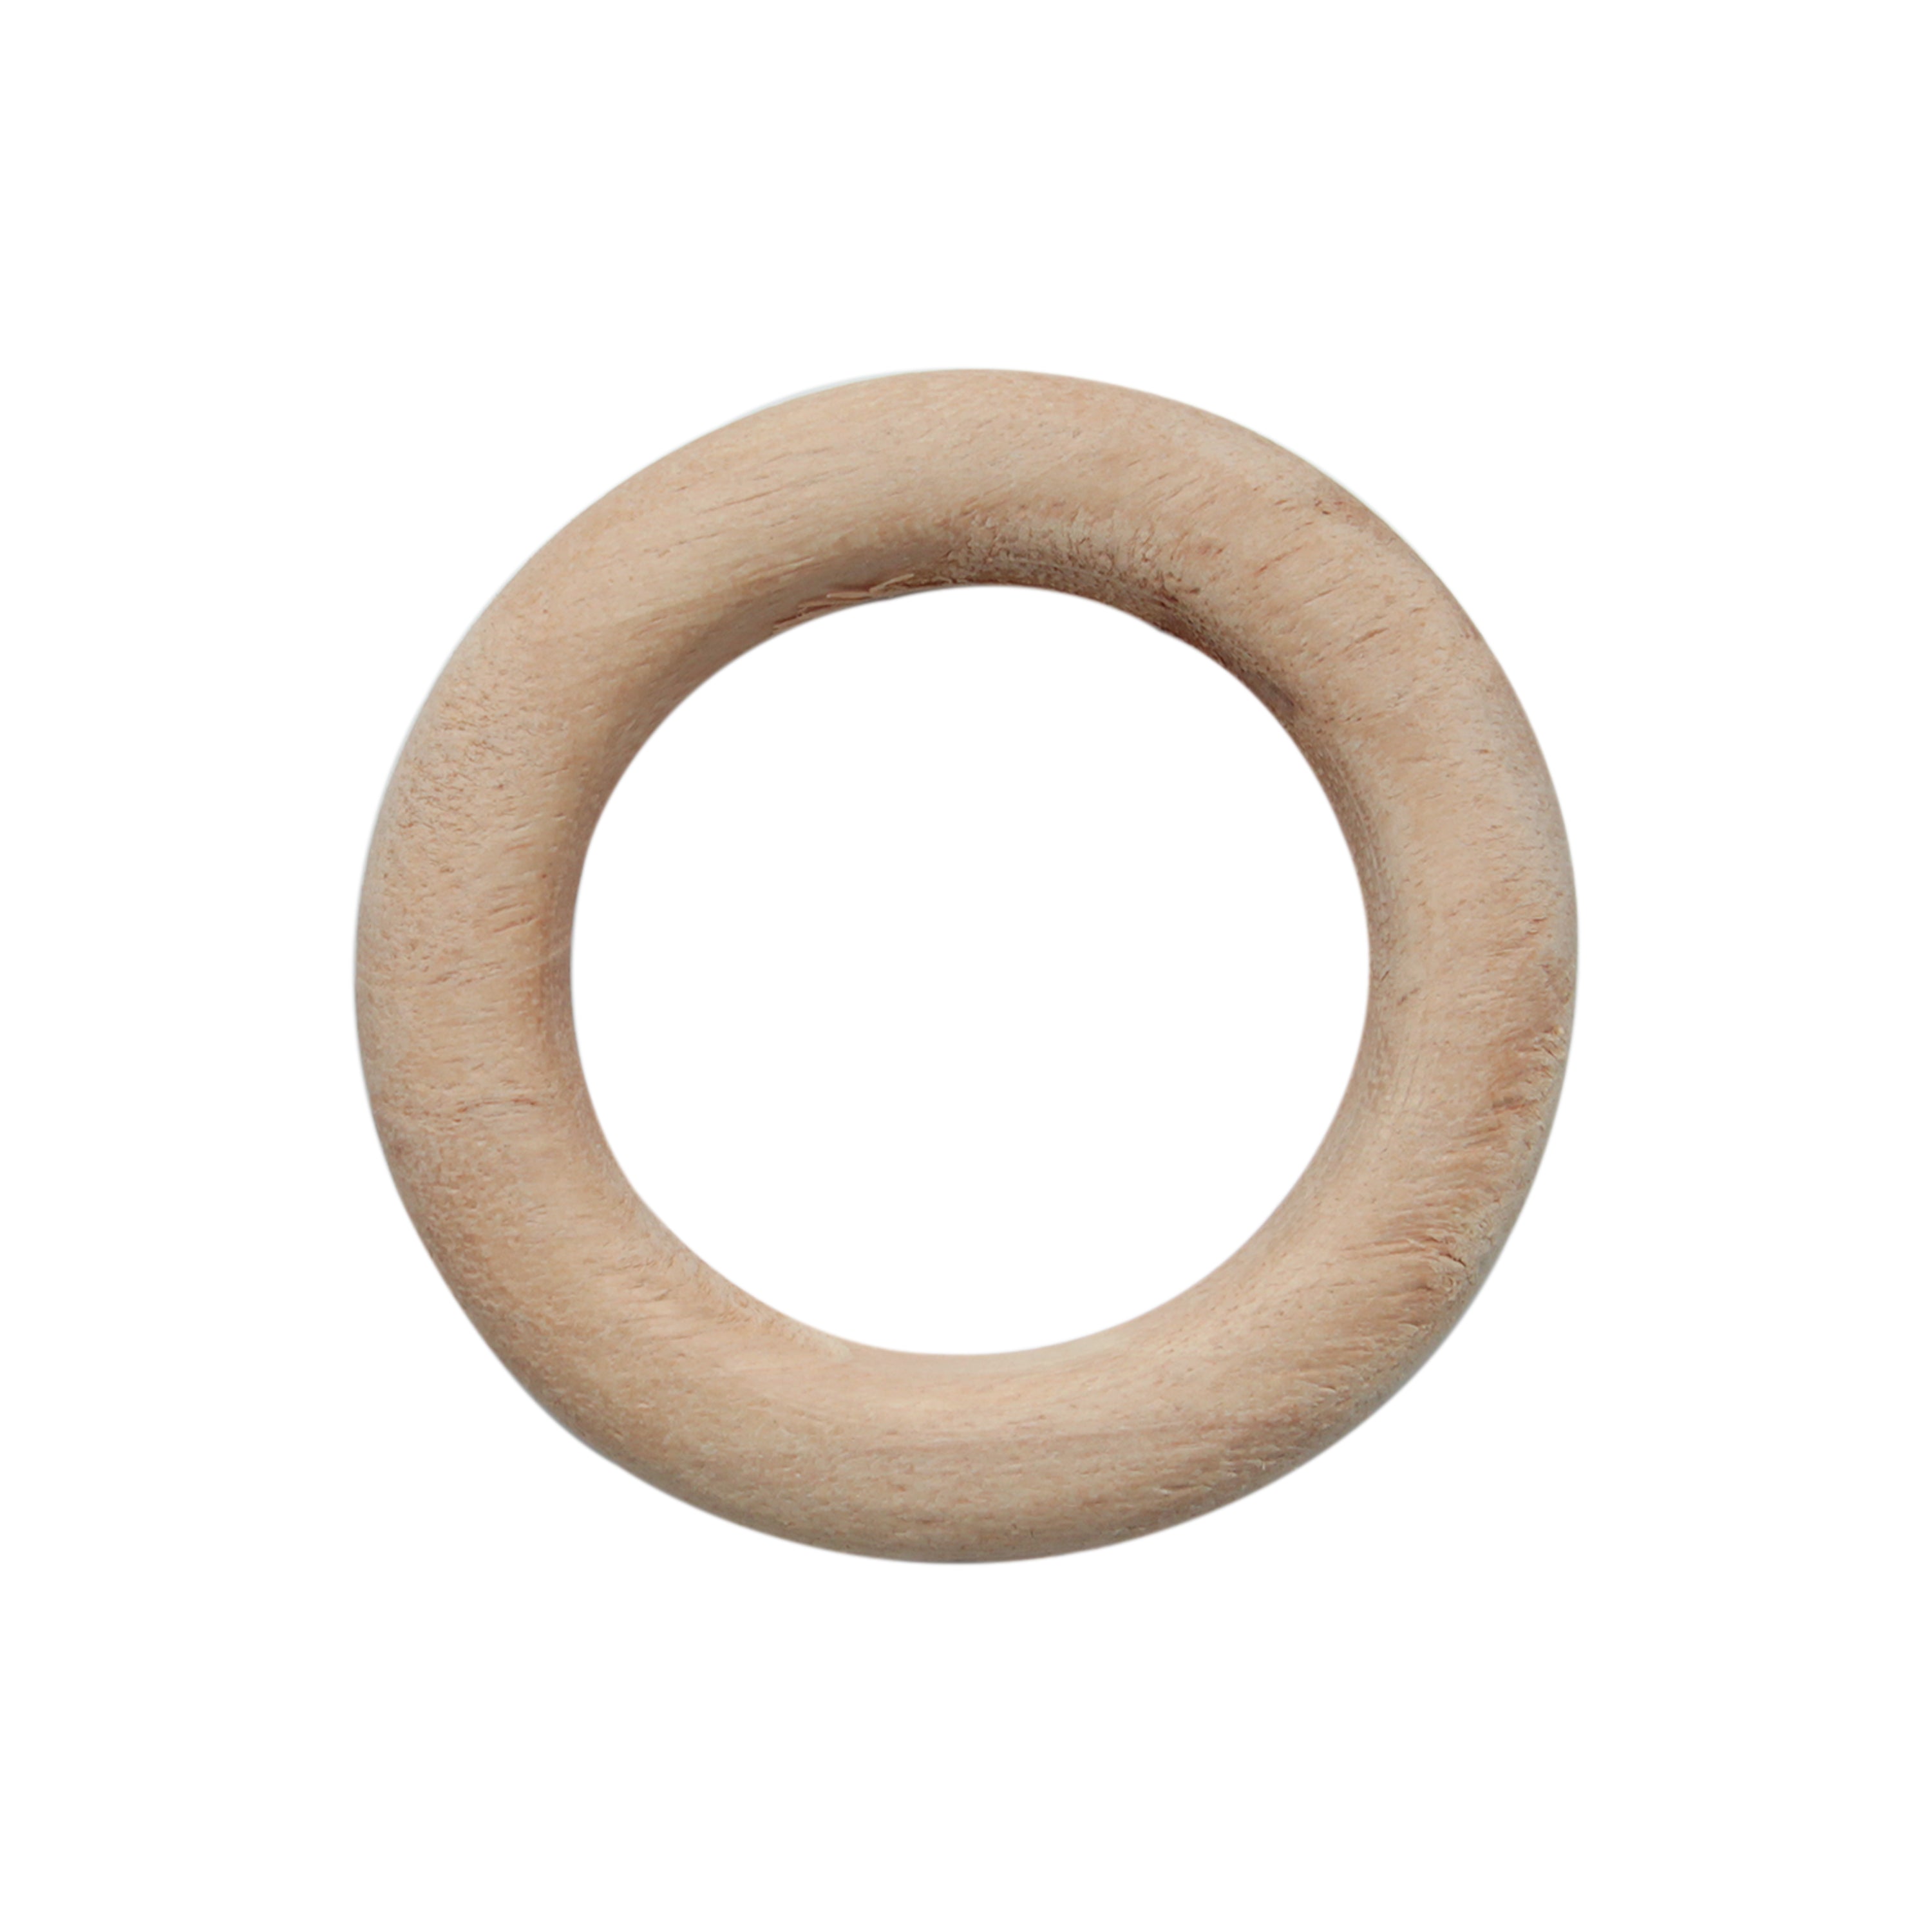 Wooden Rings 2Inch Dia Natural 10Pcs